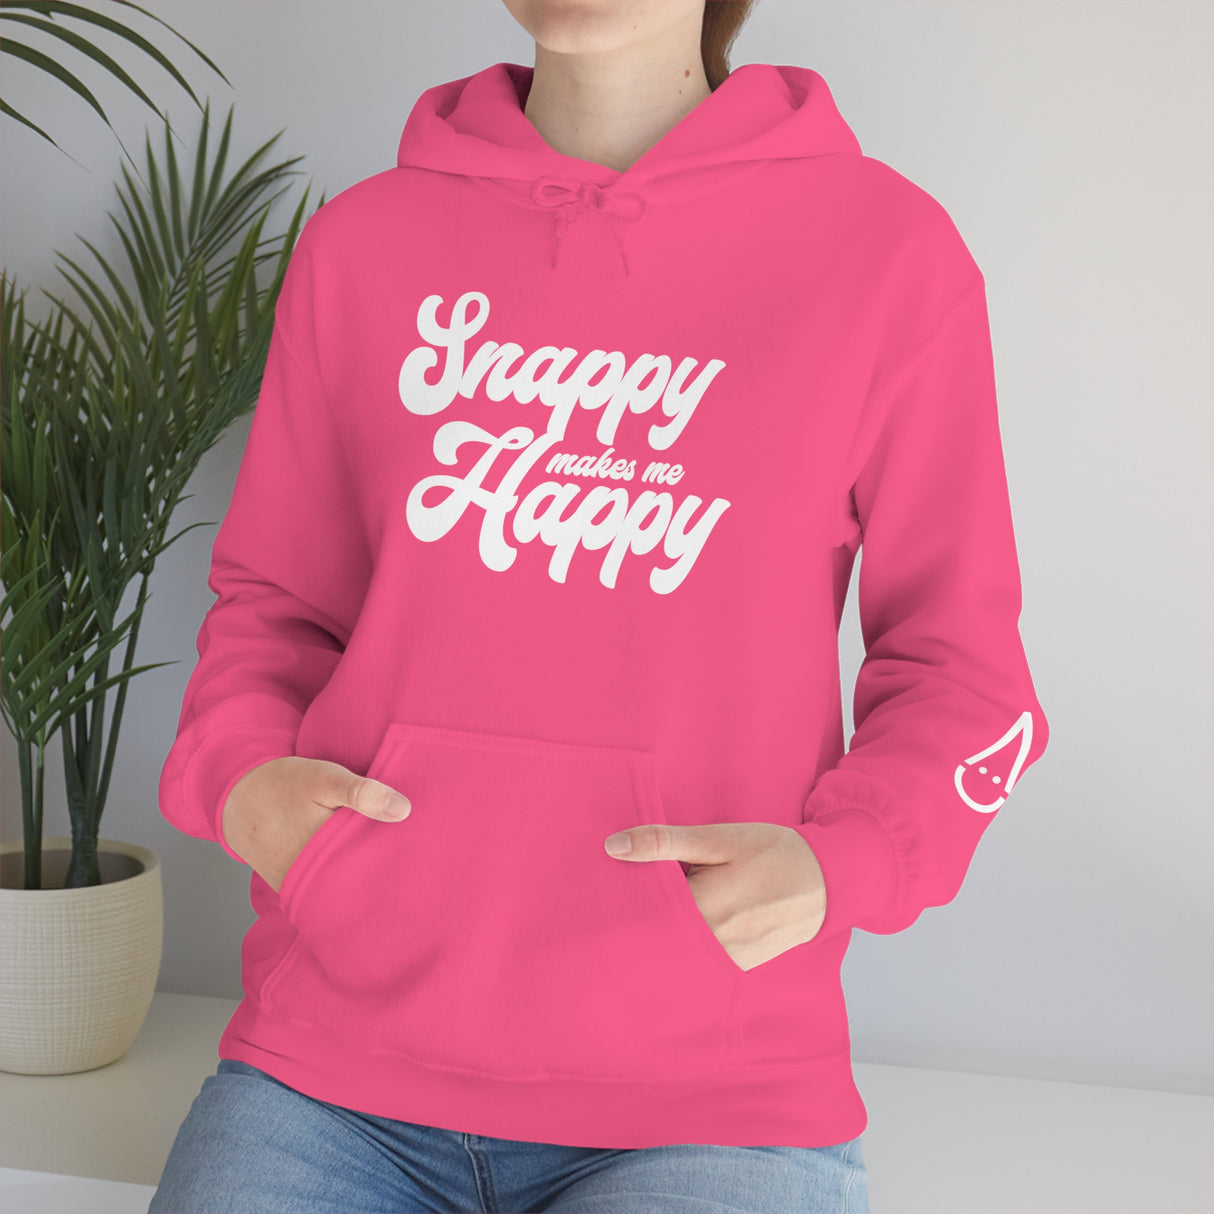 Snappy Makes Me Happy Hoodie - ClixAuto